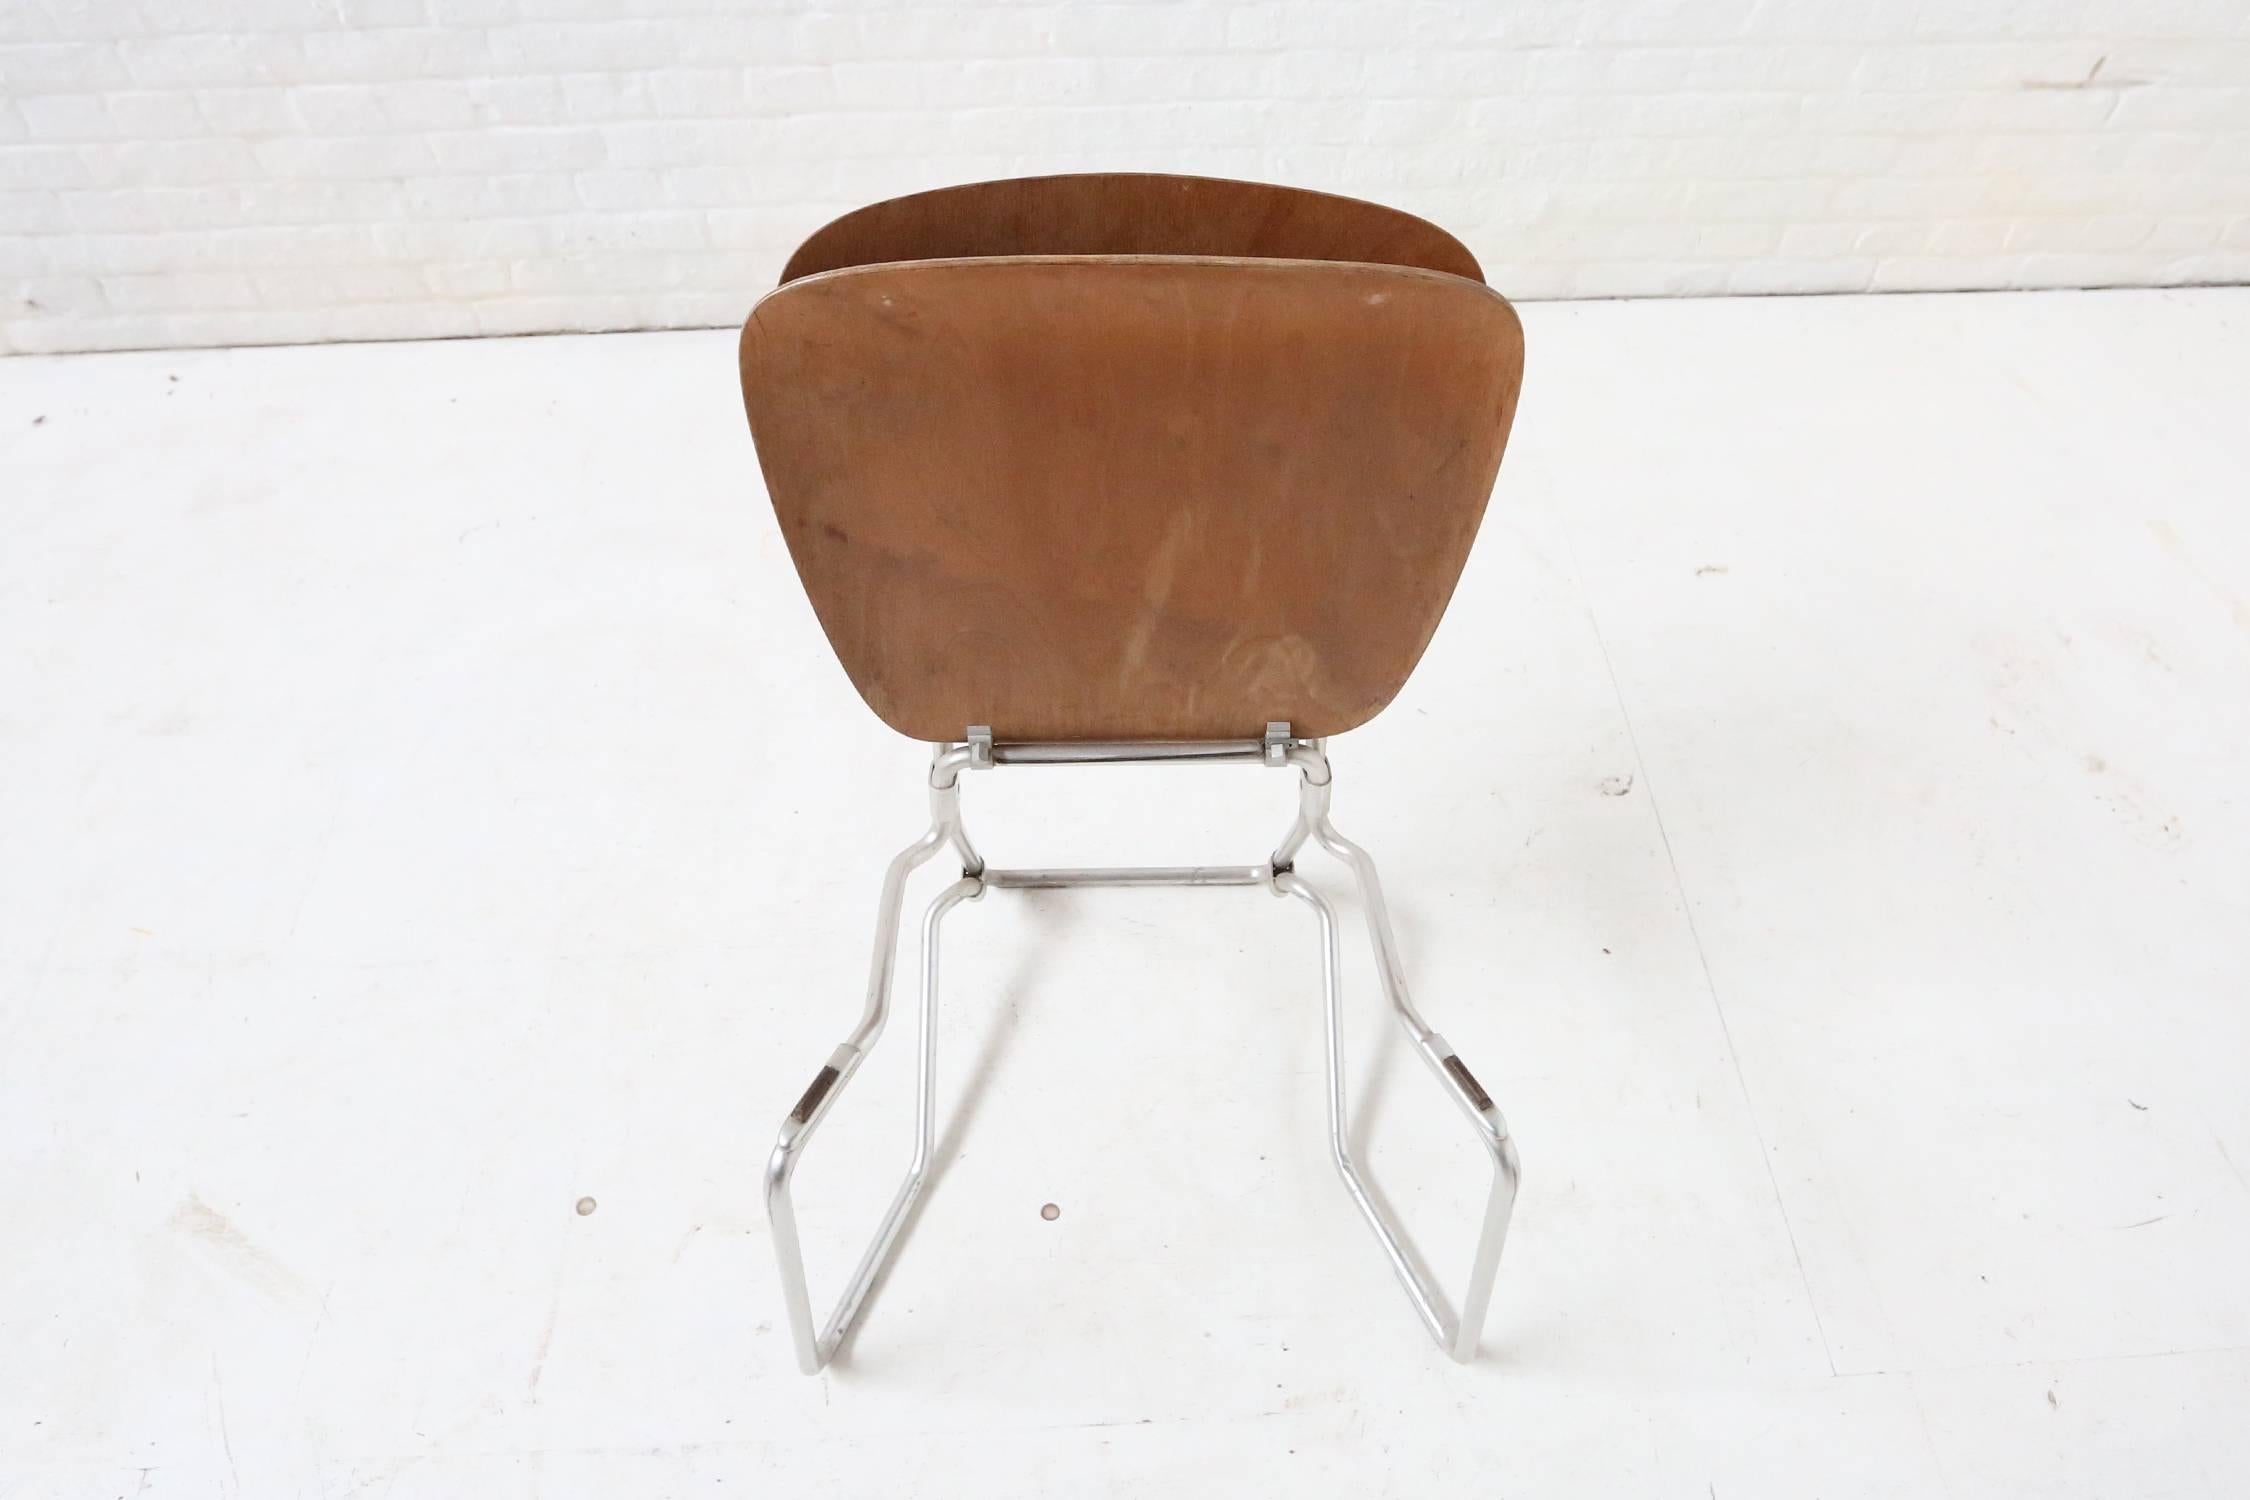 First Edition Aluflex Chairs by Armin Wirth Switzerland, 1950s For Sale 3